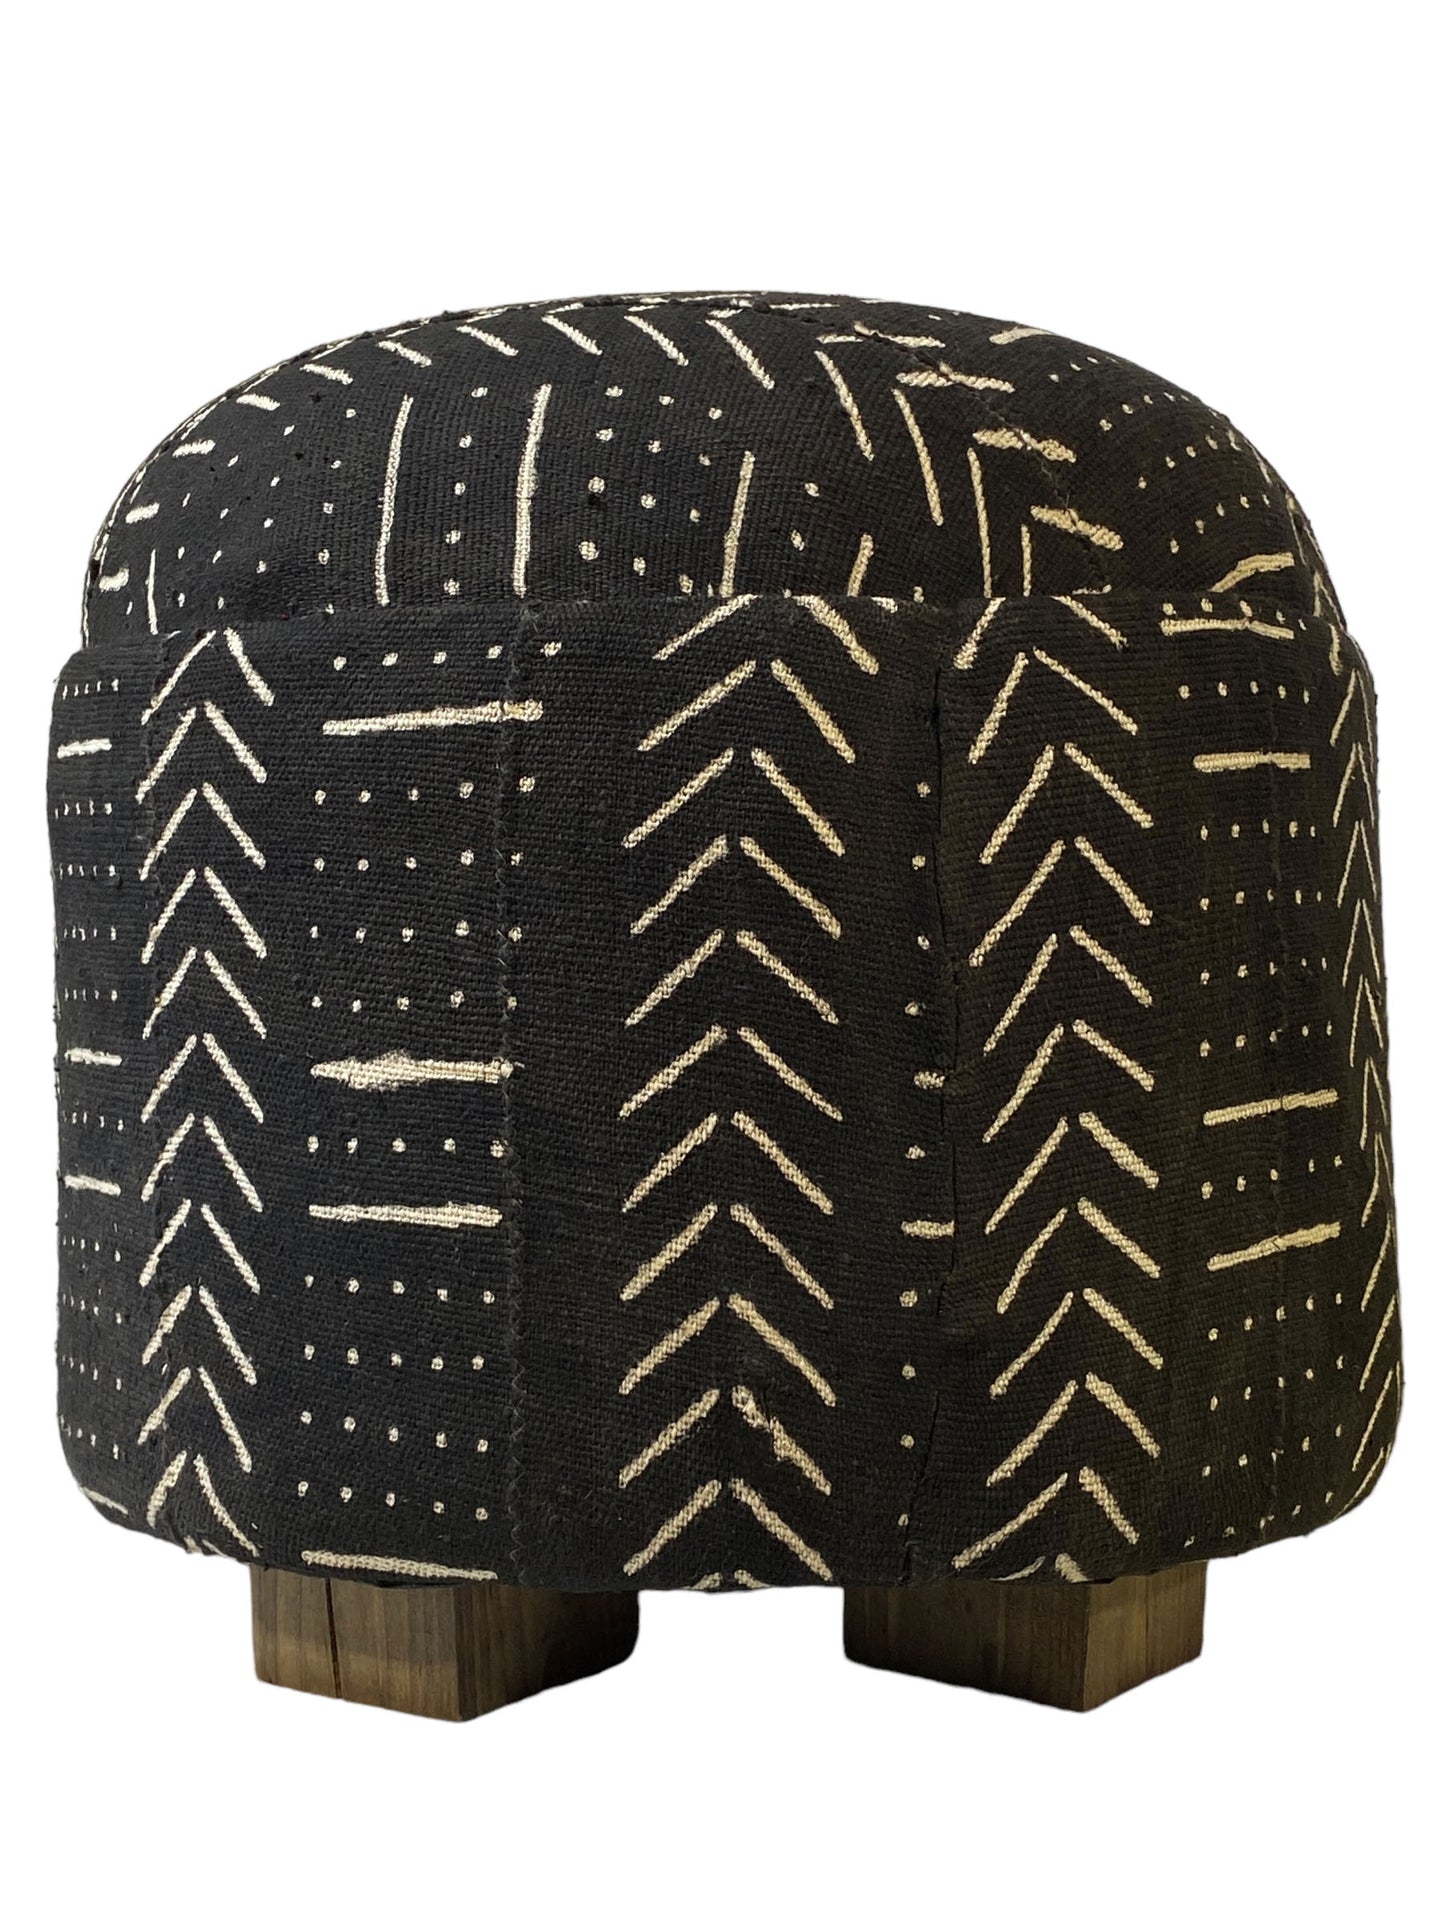 #640Custom Made African Black &White Vintage Malian Mud Cloth Ottoman 17" H